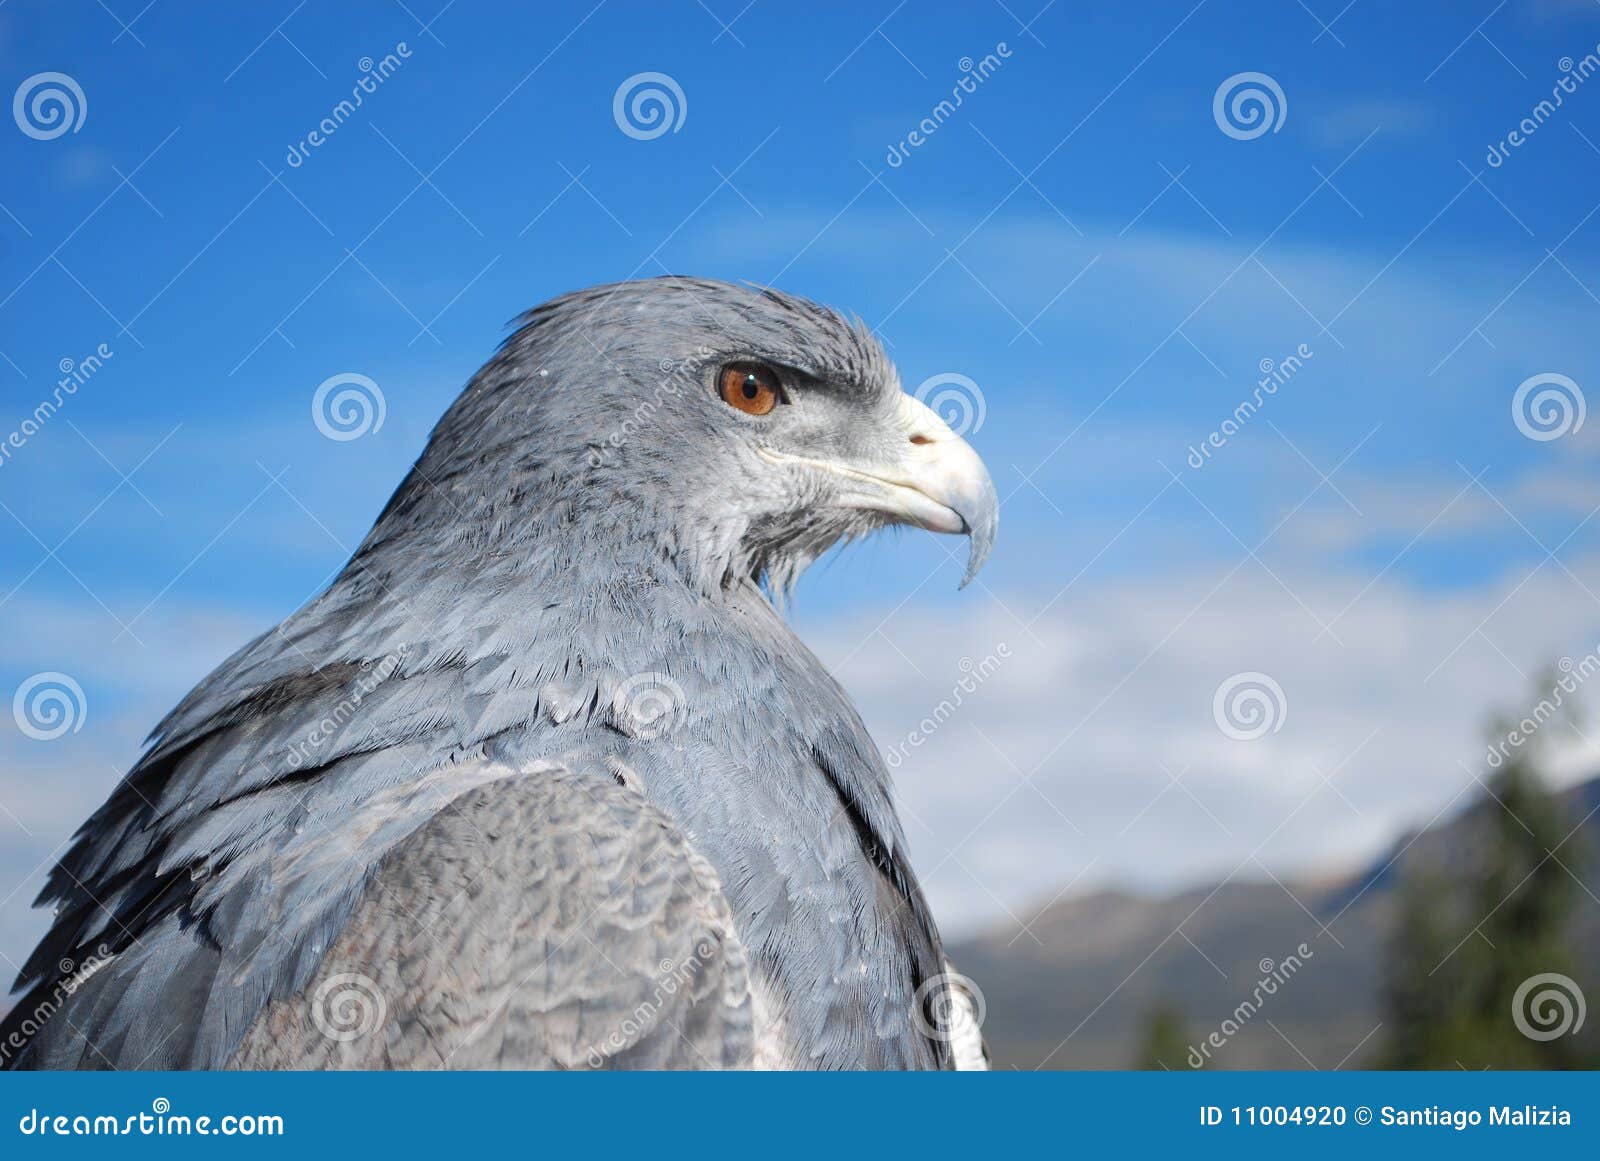 andean eagle